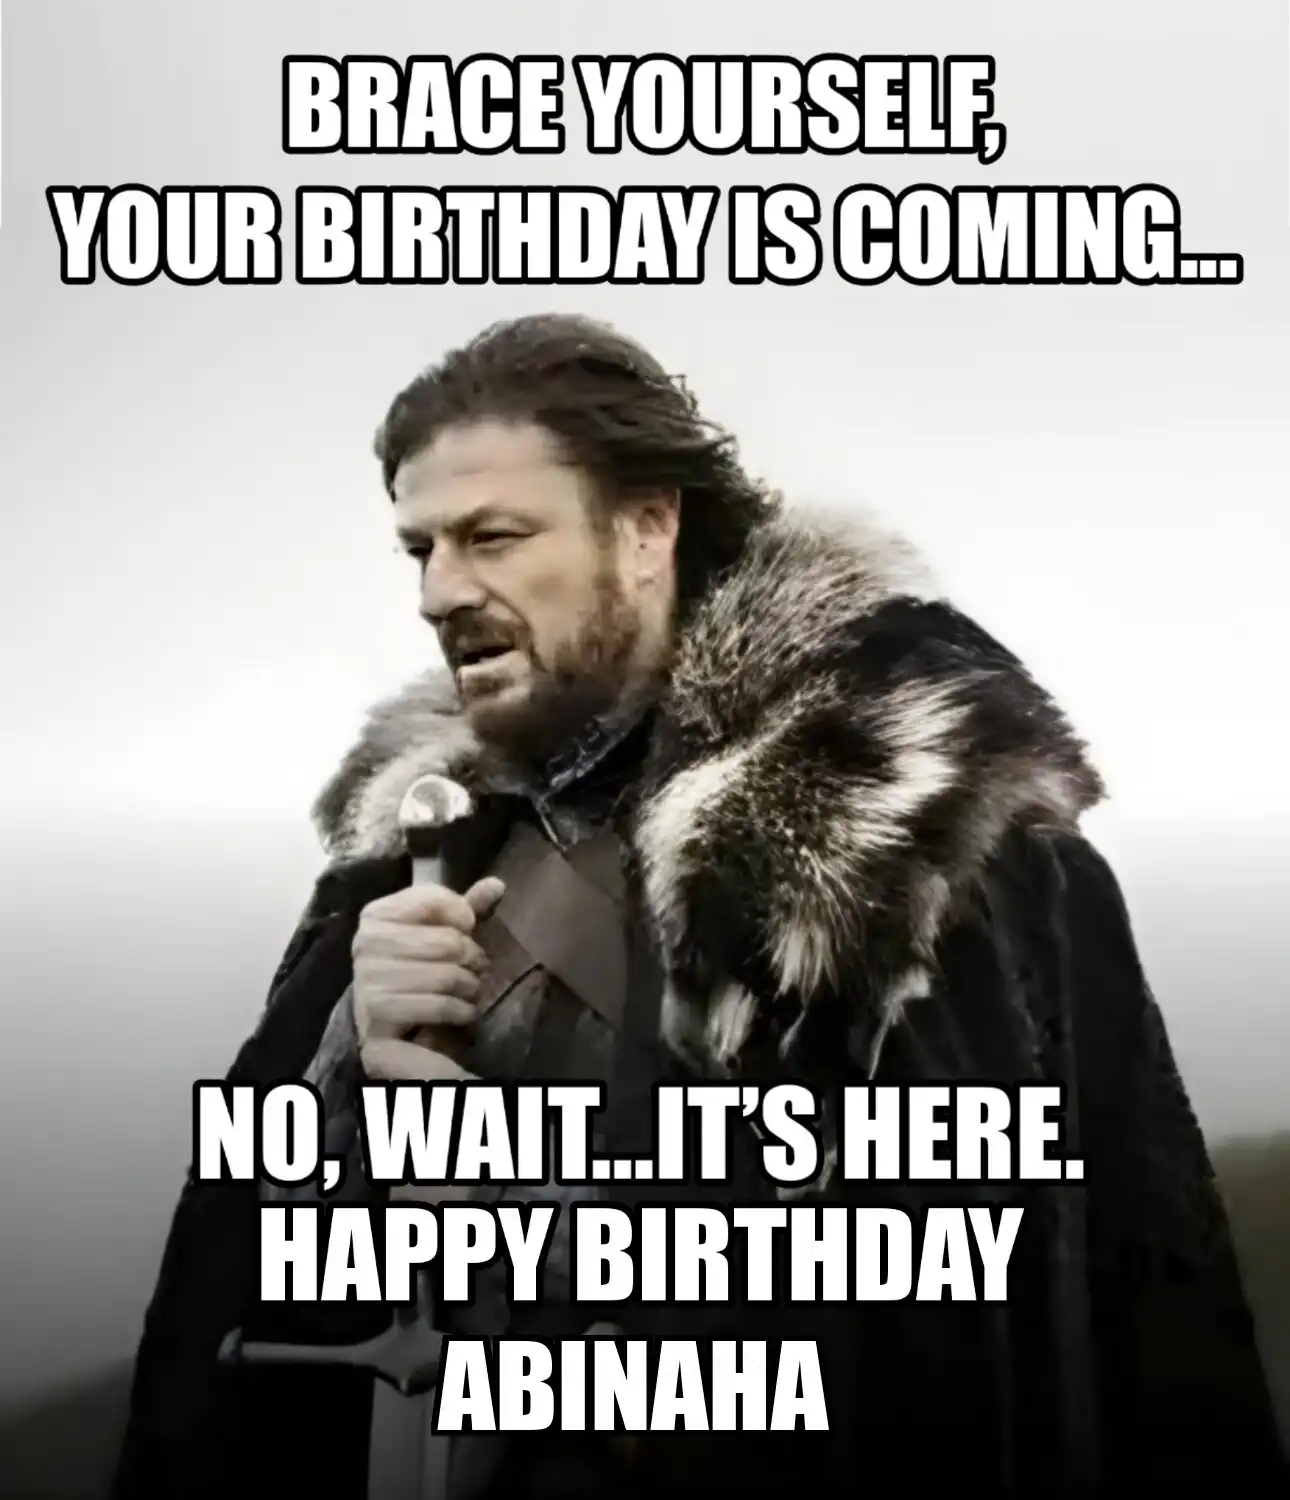 Happy Birthday Abinaha Brace Yourself Your Birthday Is Coming Meme